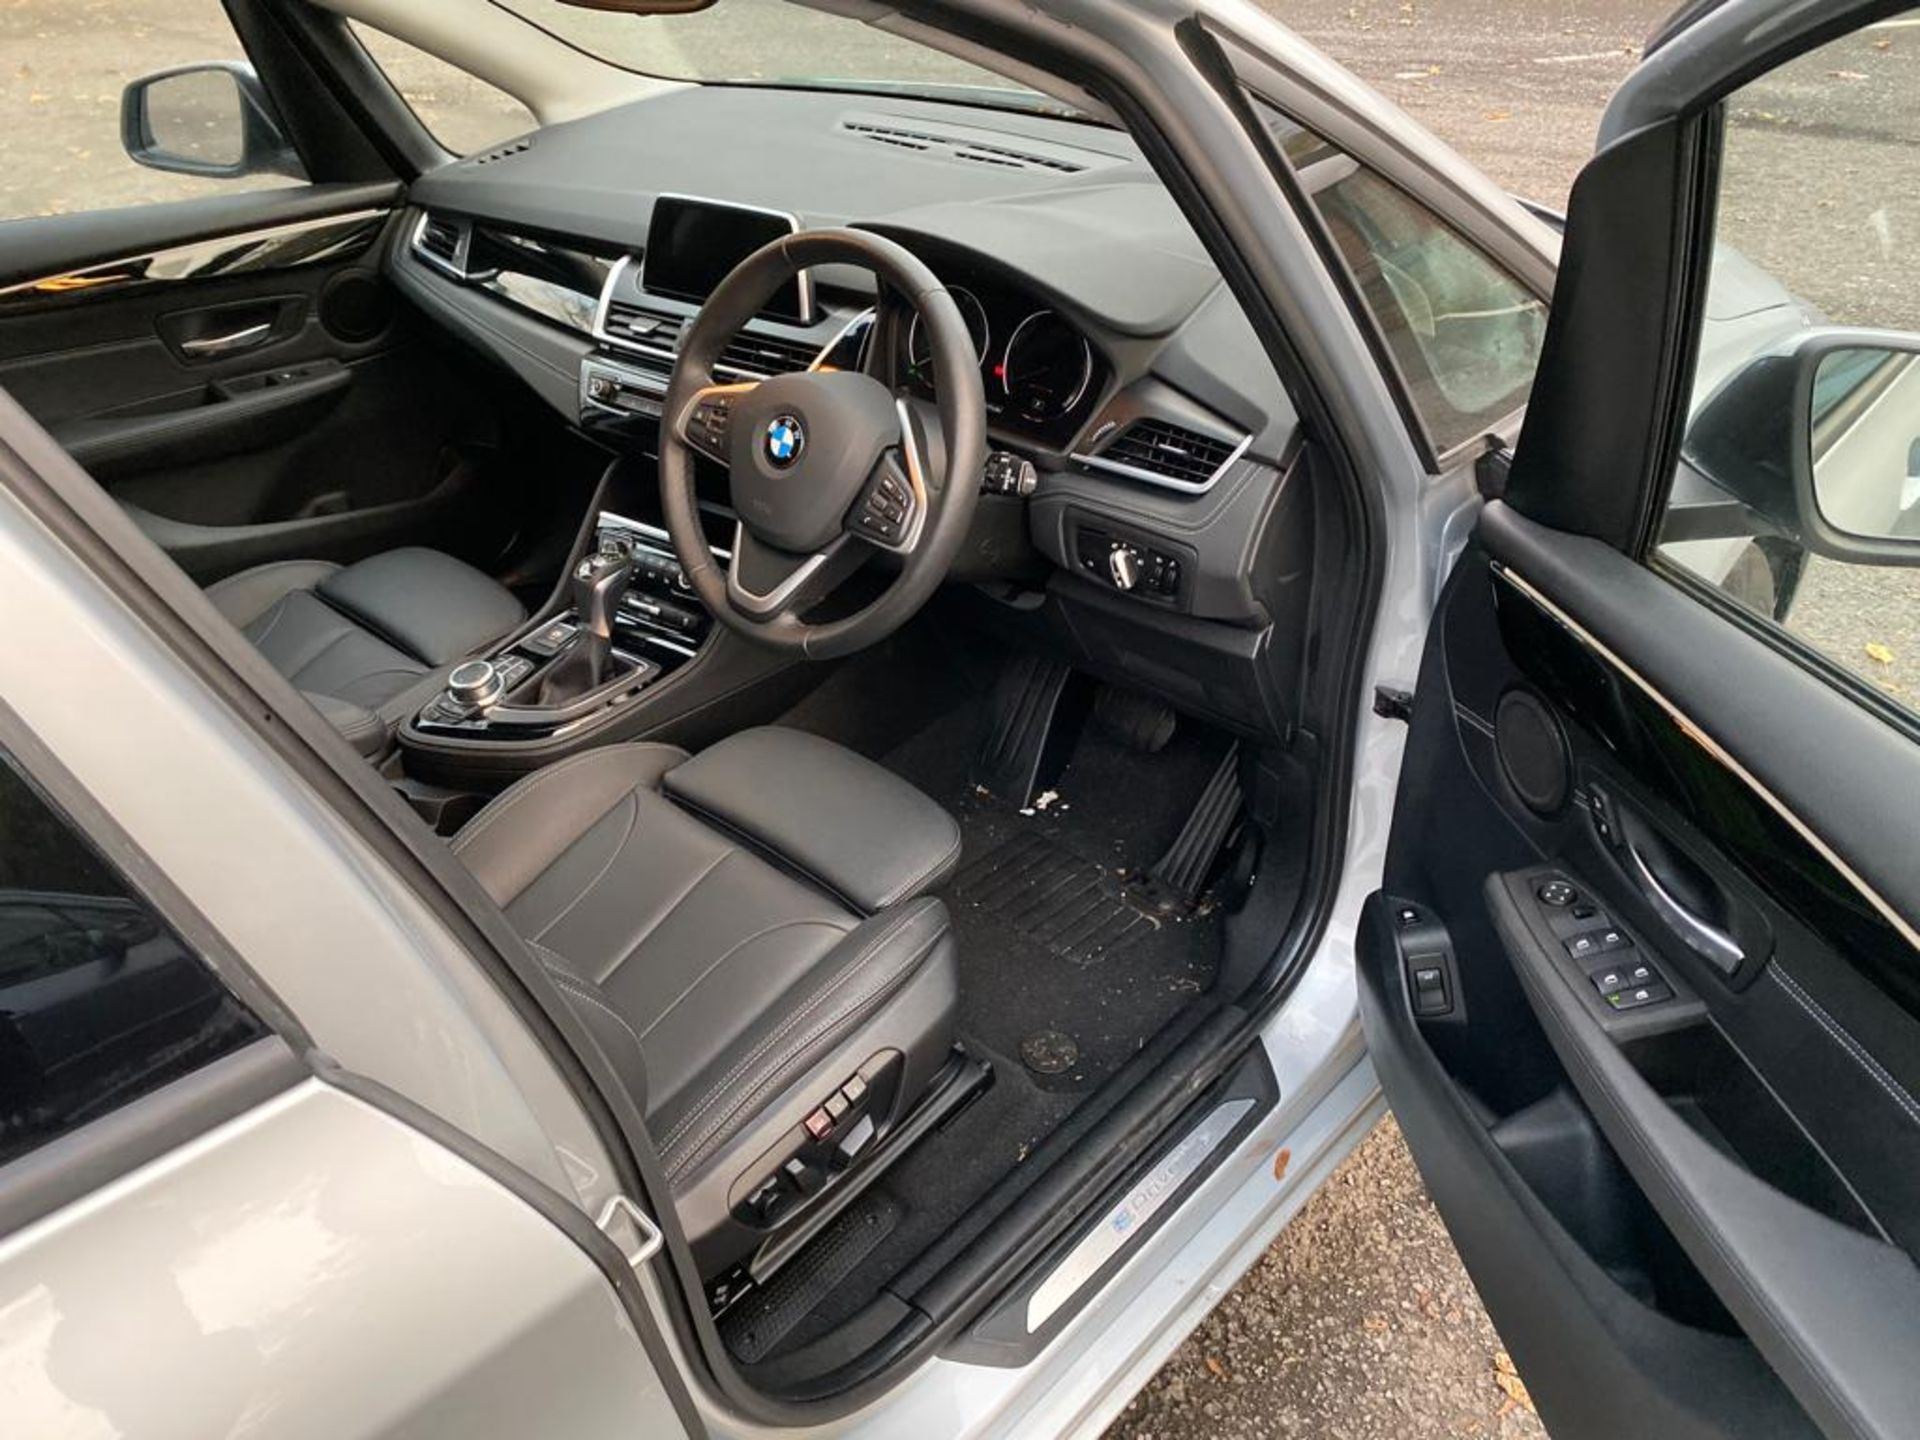 2019/68 REG BMW 225XE SPORT PREMIUM AUTOMATIC 1.5 HYBRID ELECTRIC SILVER 5 DOOR HATCHBACK *PLUS VAT* - Image 13 of 17